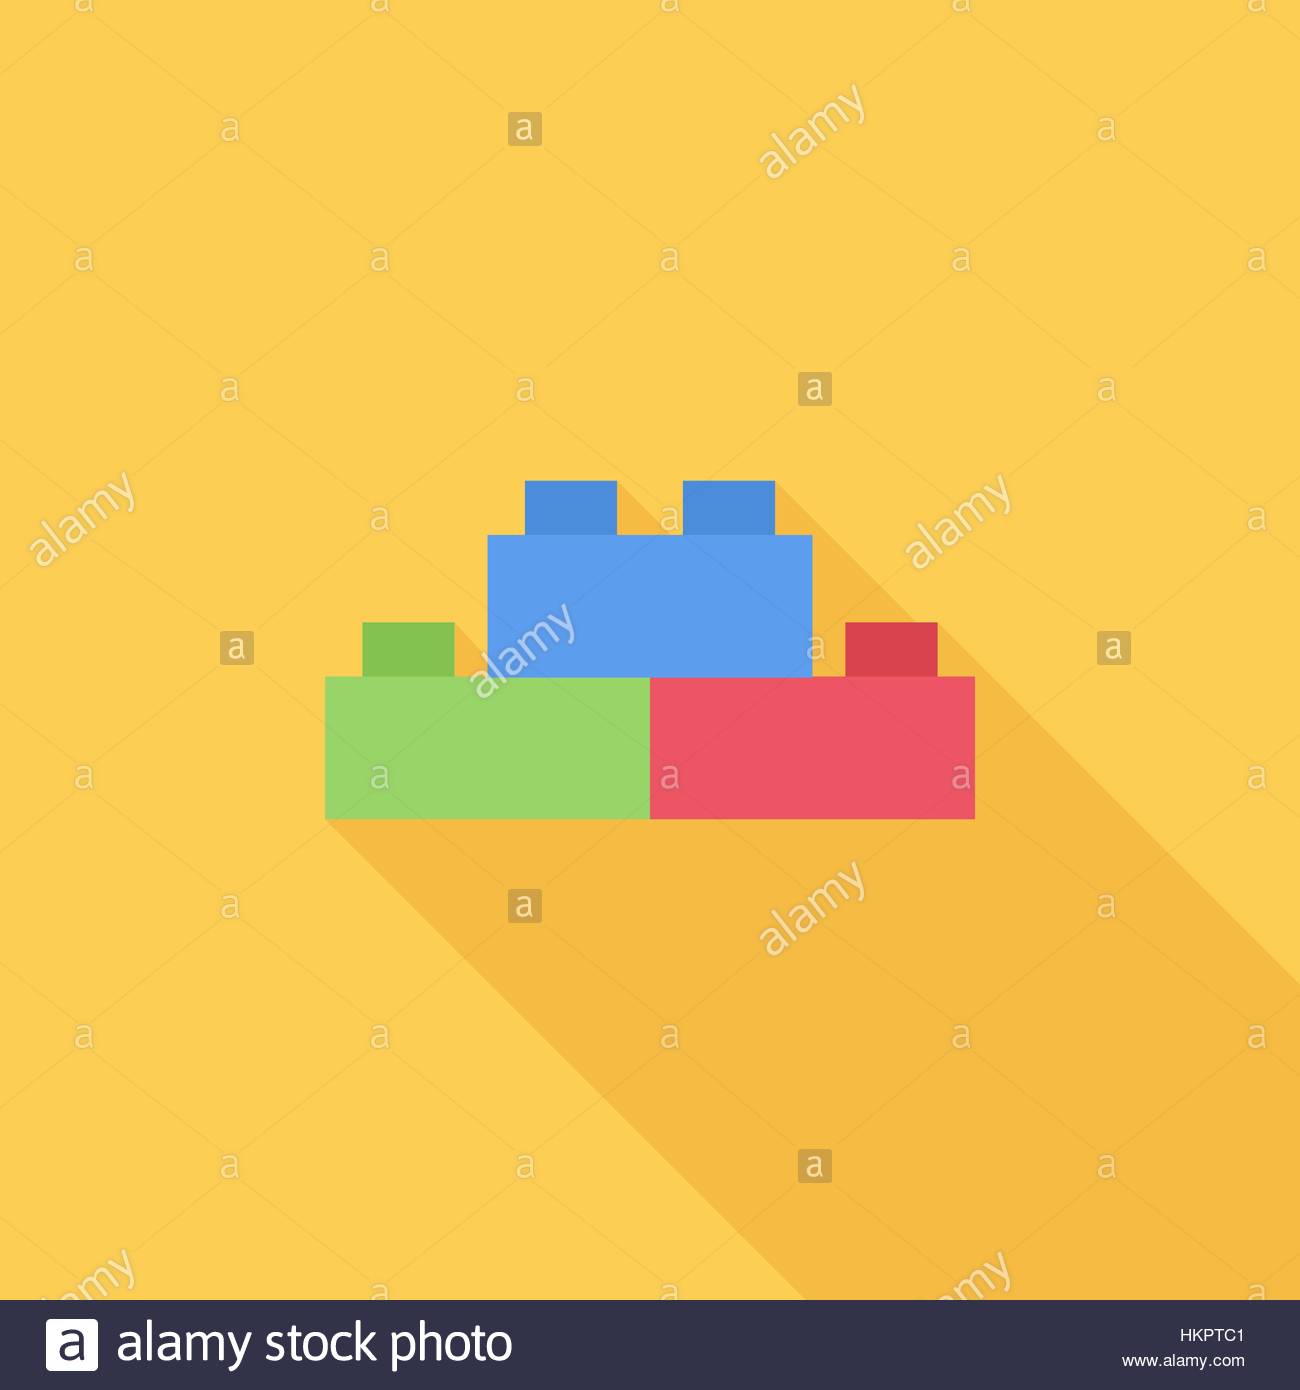 Building-blocks icons | Noun Project